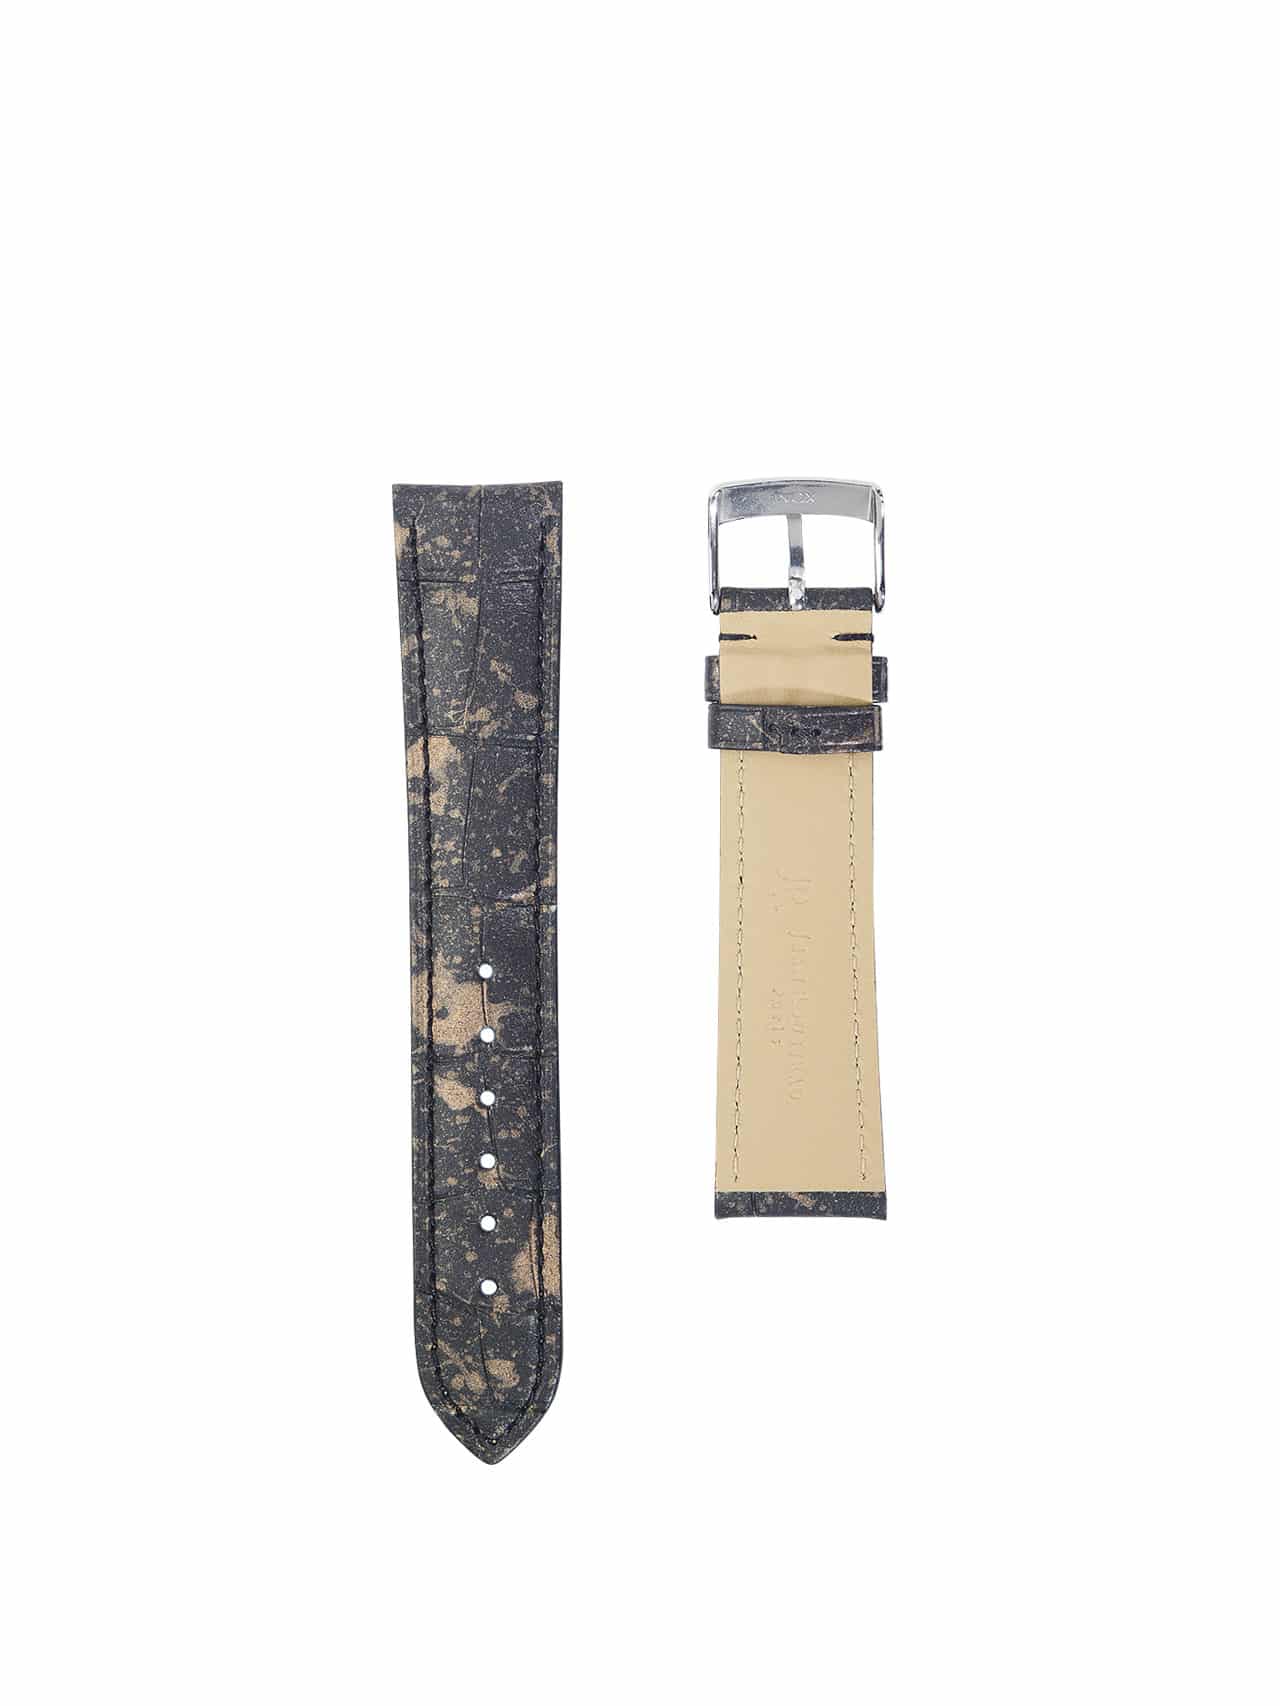 Watch strap 3.5 Asteria rubber touch crocodile silver back